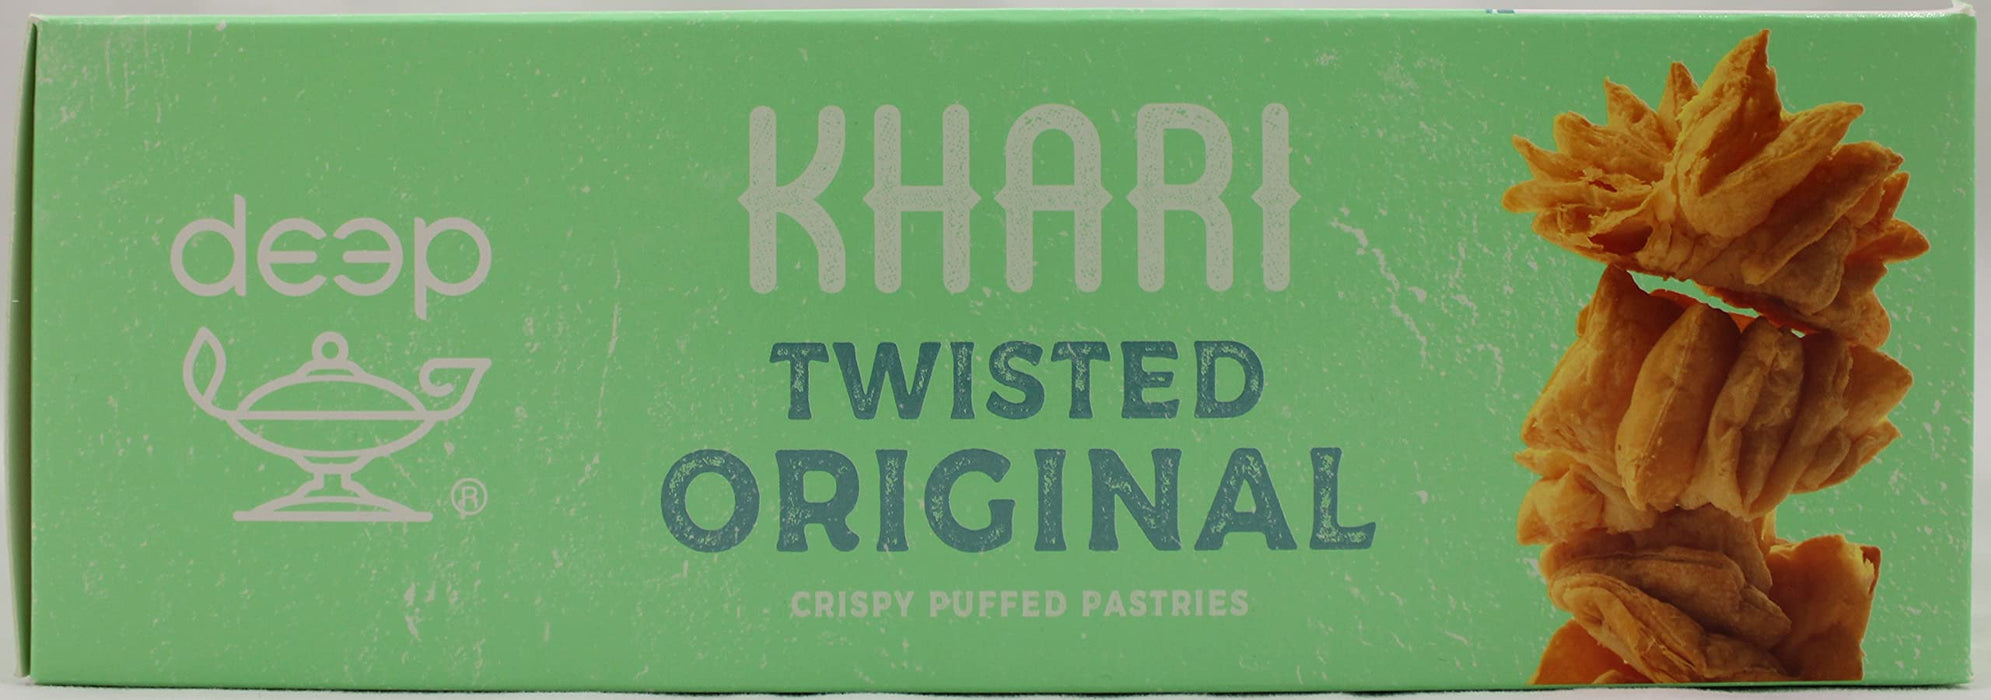 Twisted Original Khari 7oz